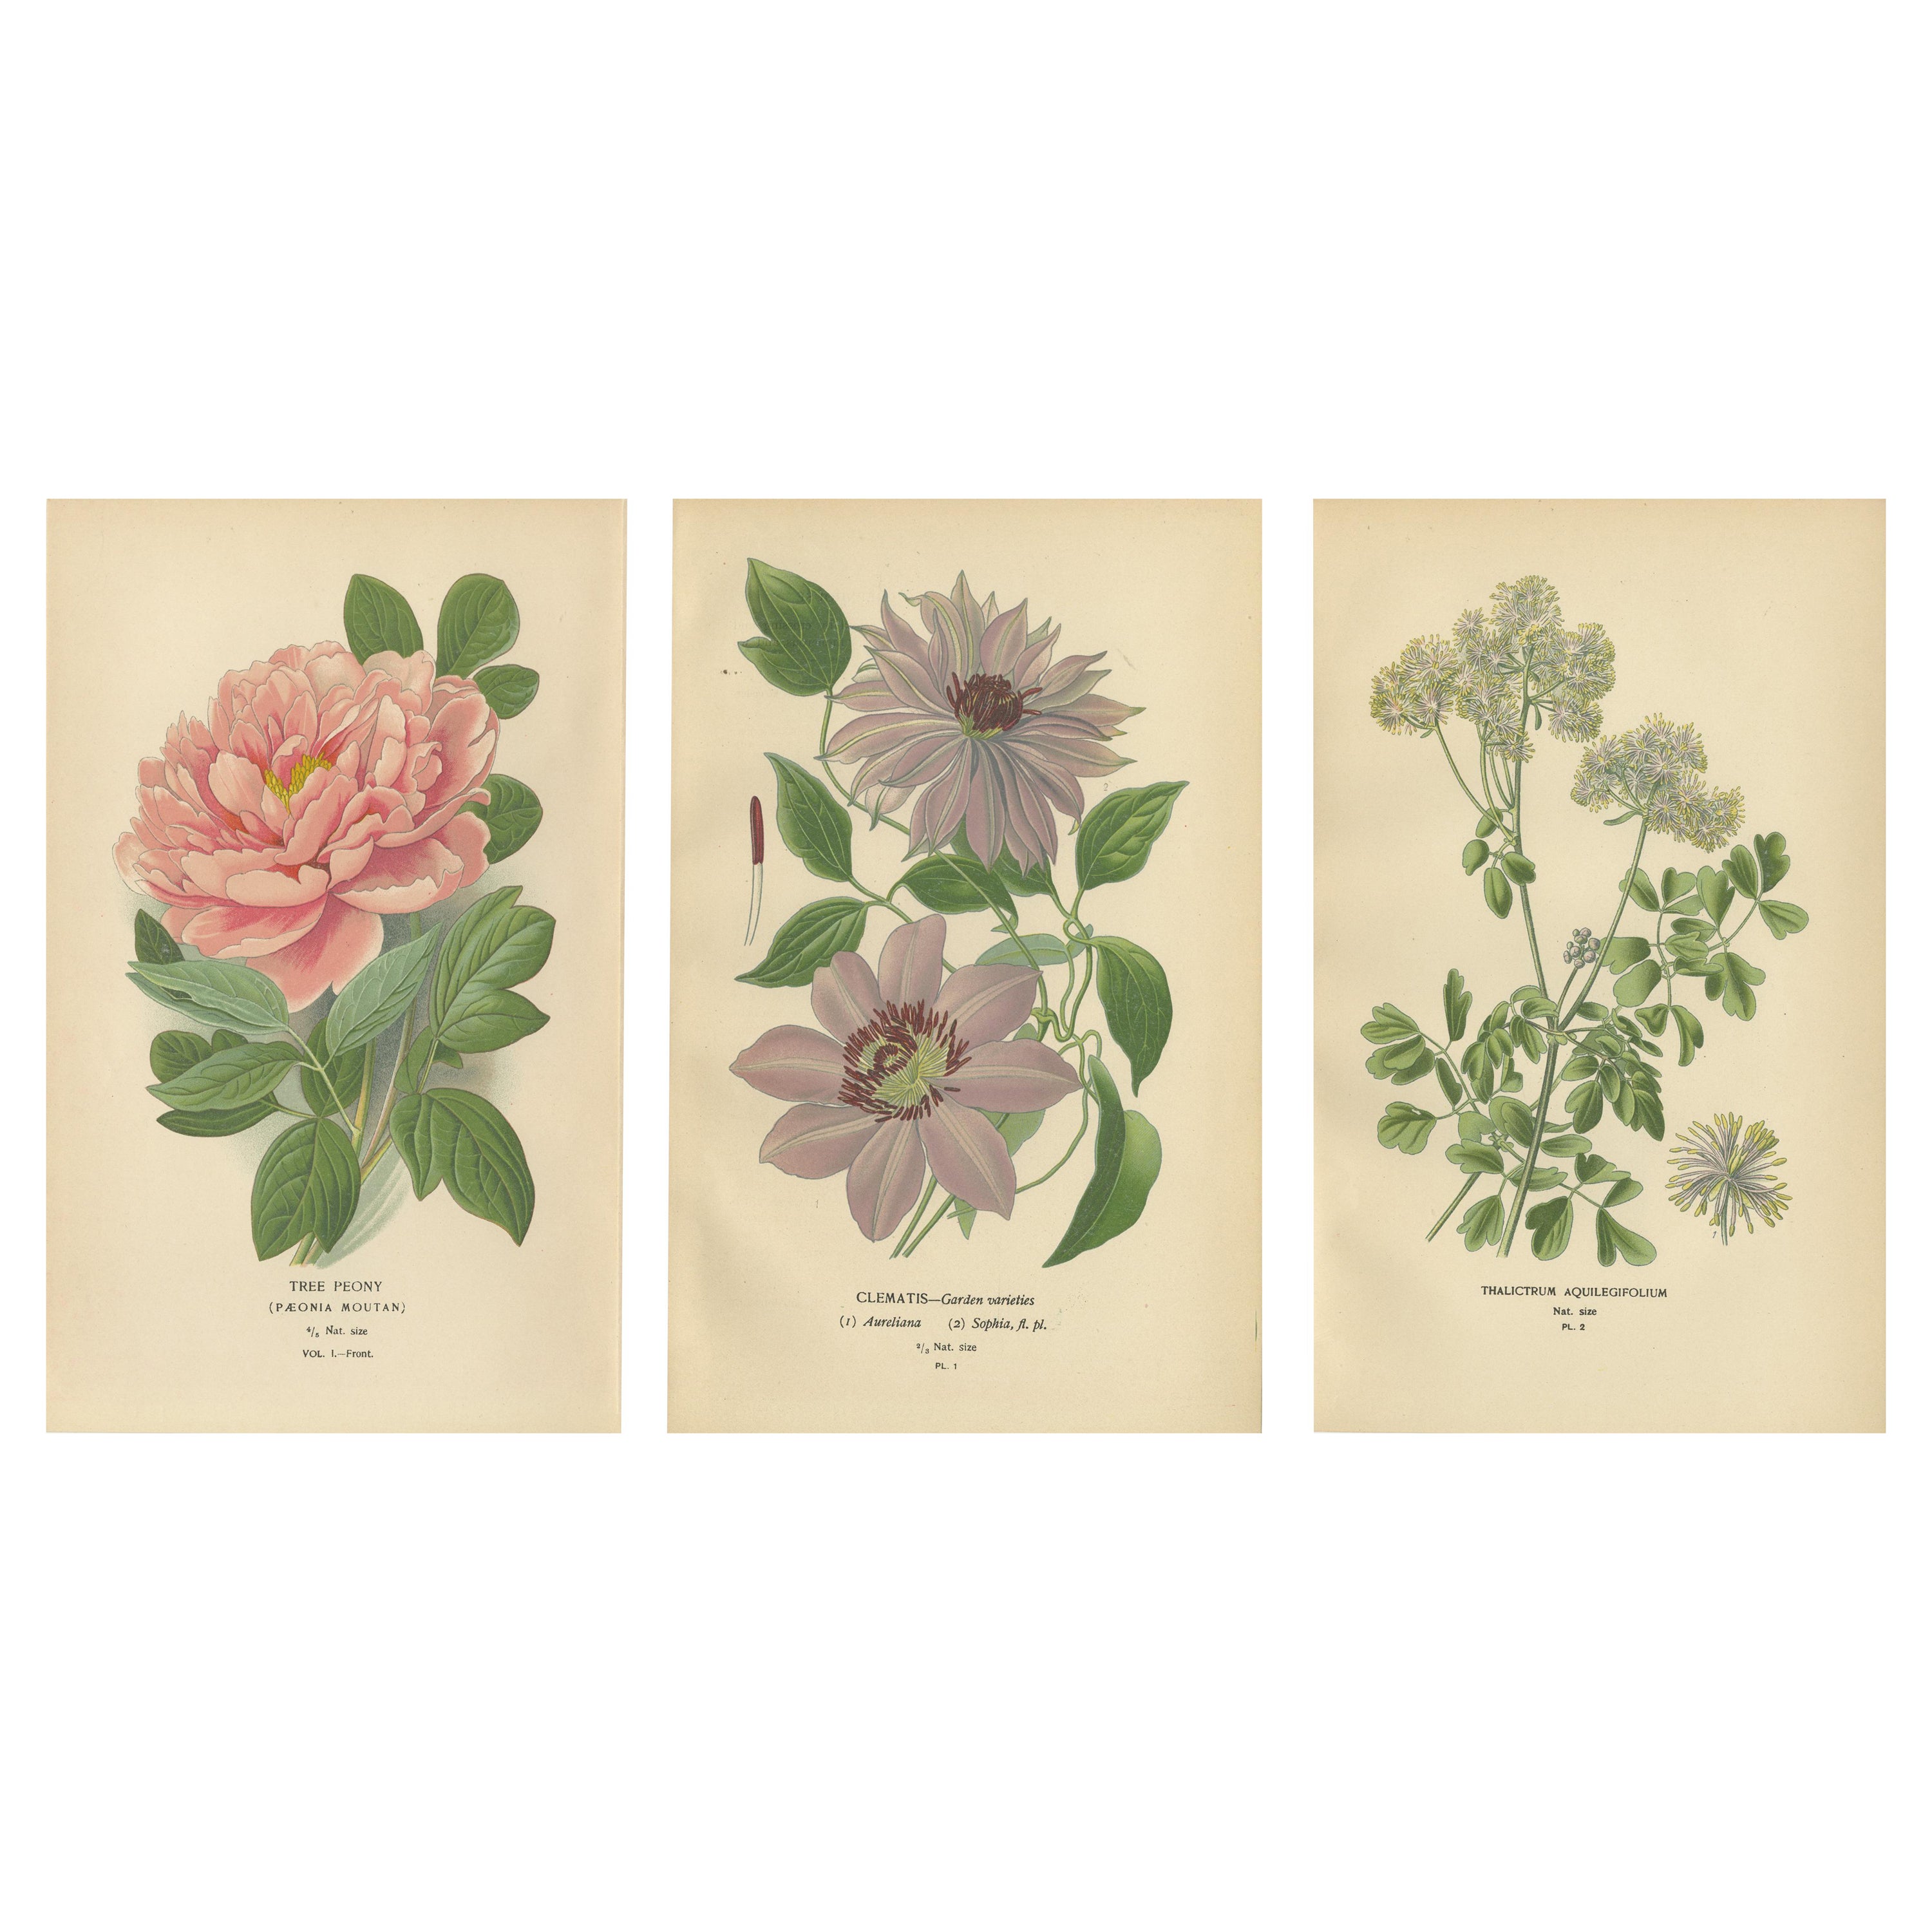 Elegance of Flora: Botanical Masterpieces des 19. Jahrhunderts, 1896